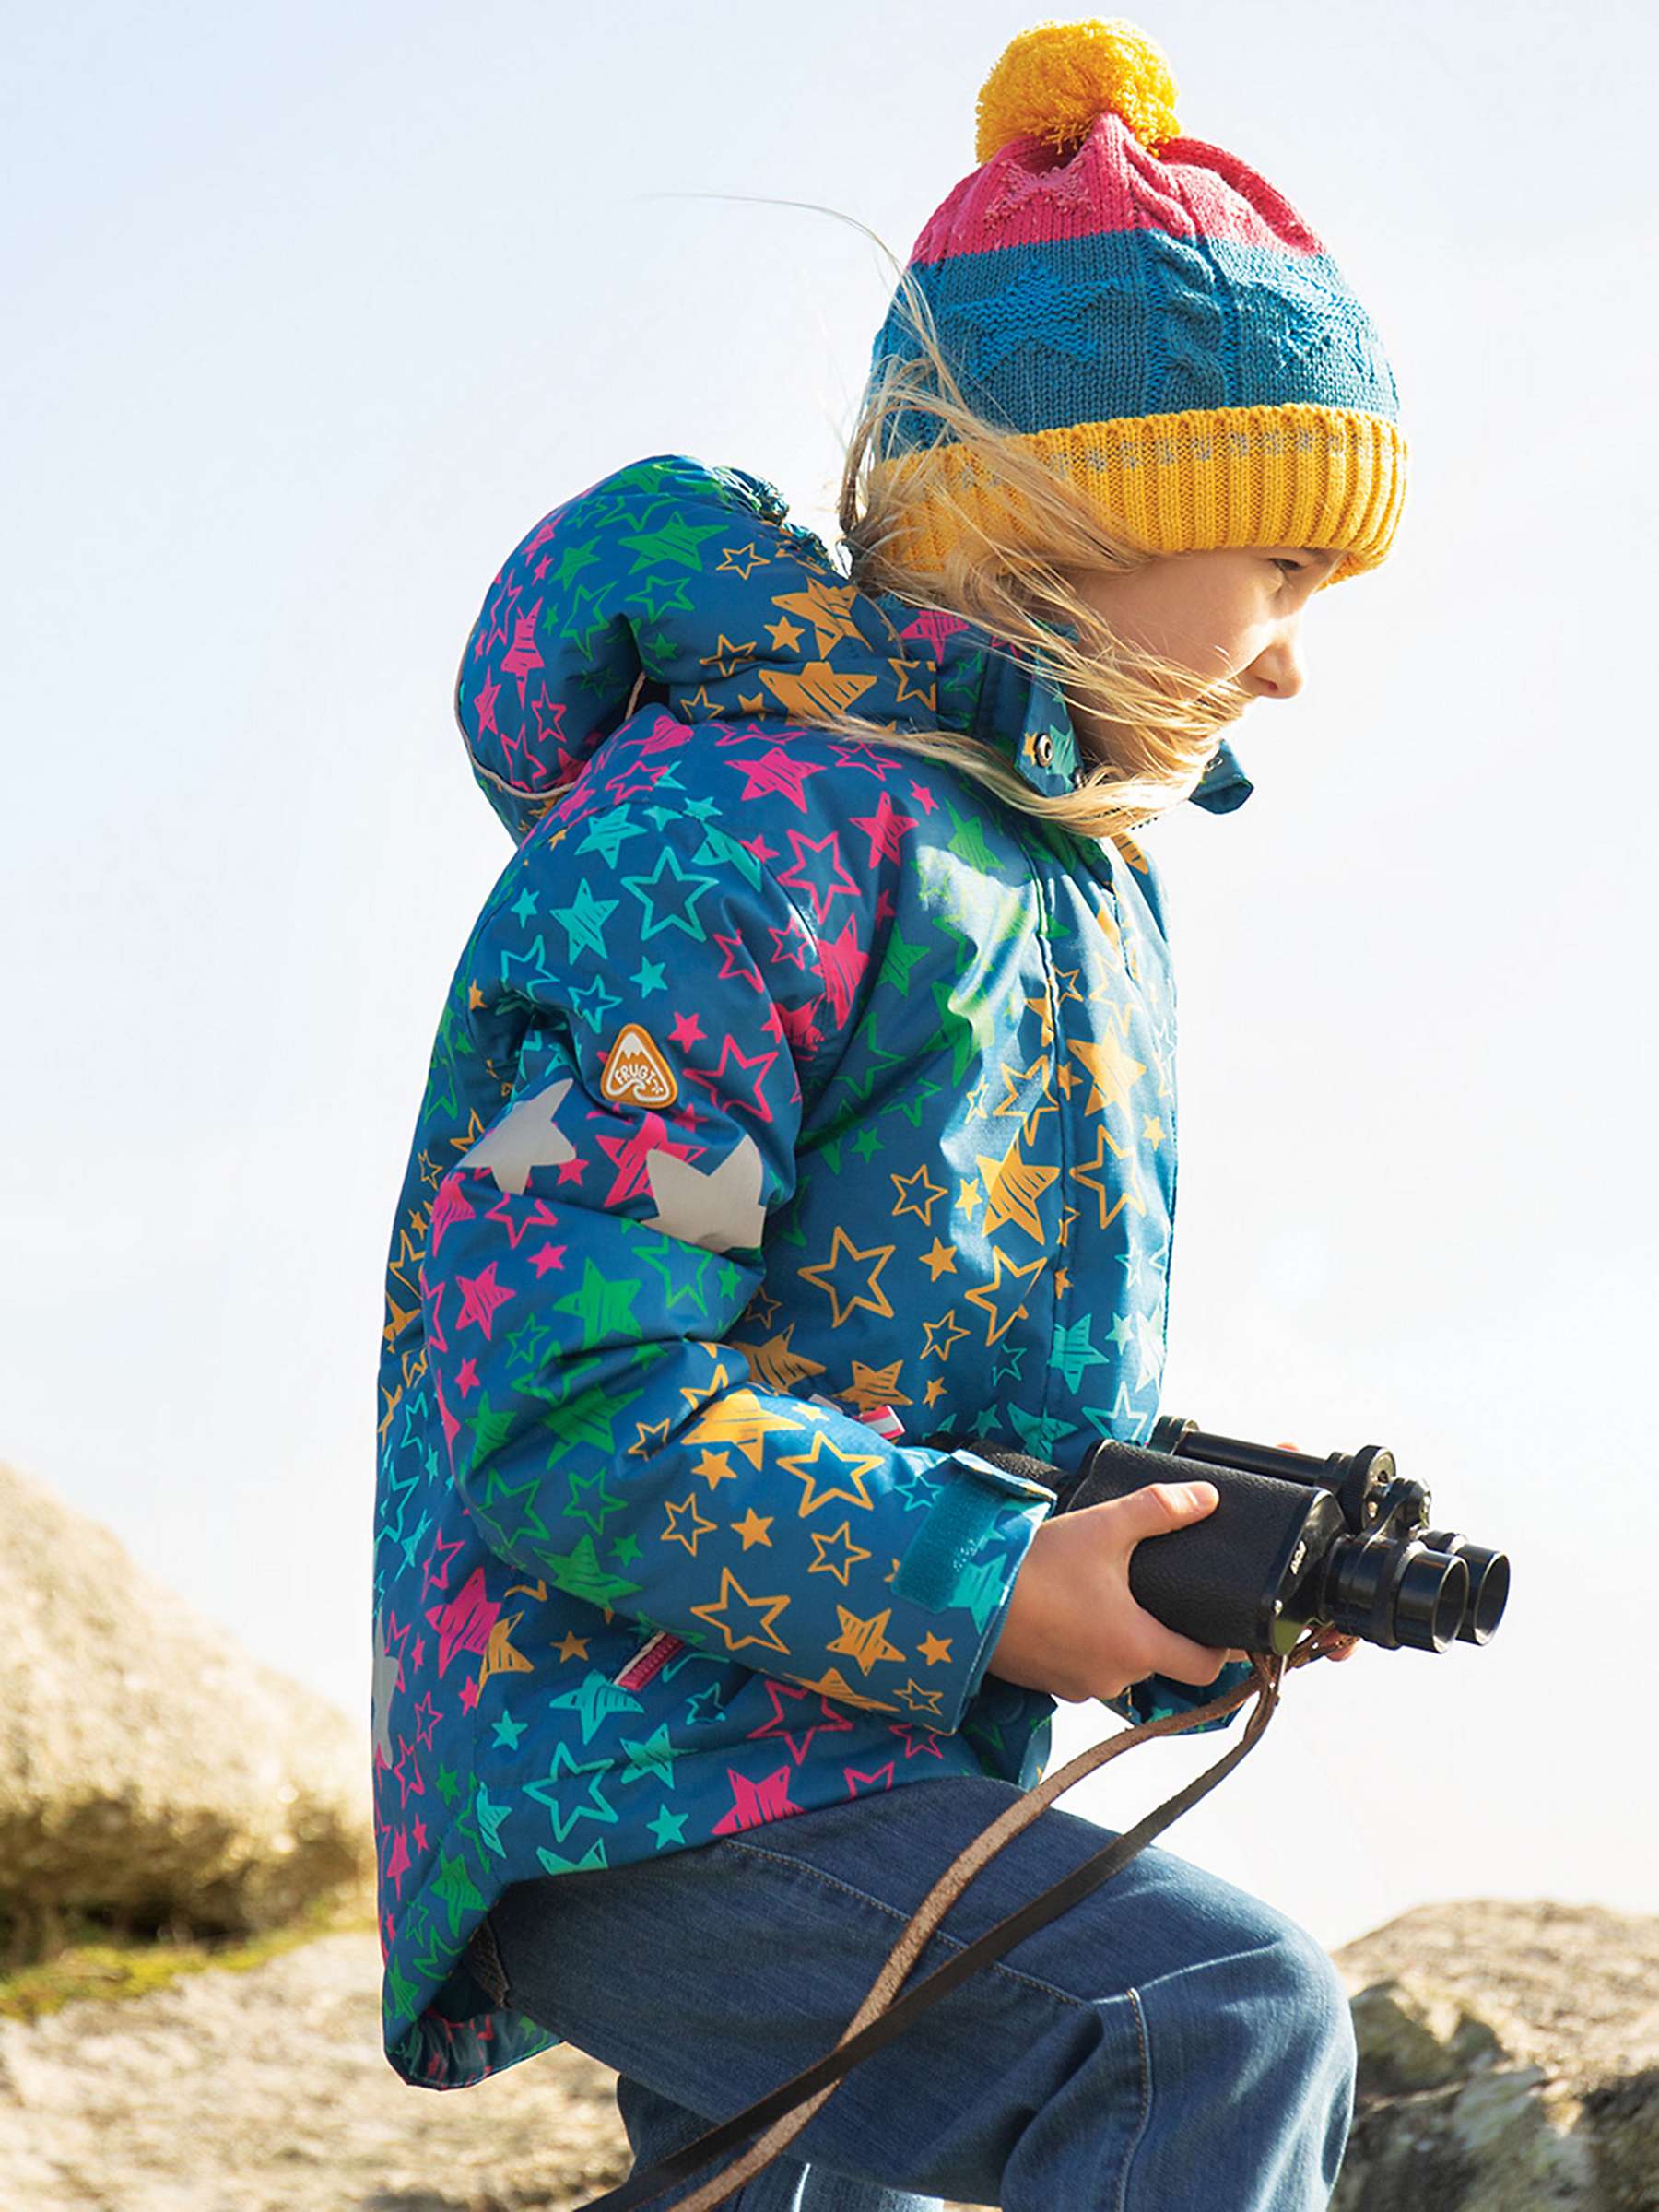 Buy Frugi Kids' Snow & Ski Super Stars Waterproof Coat, Multi Online at johnlewis.com